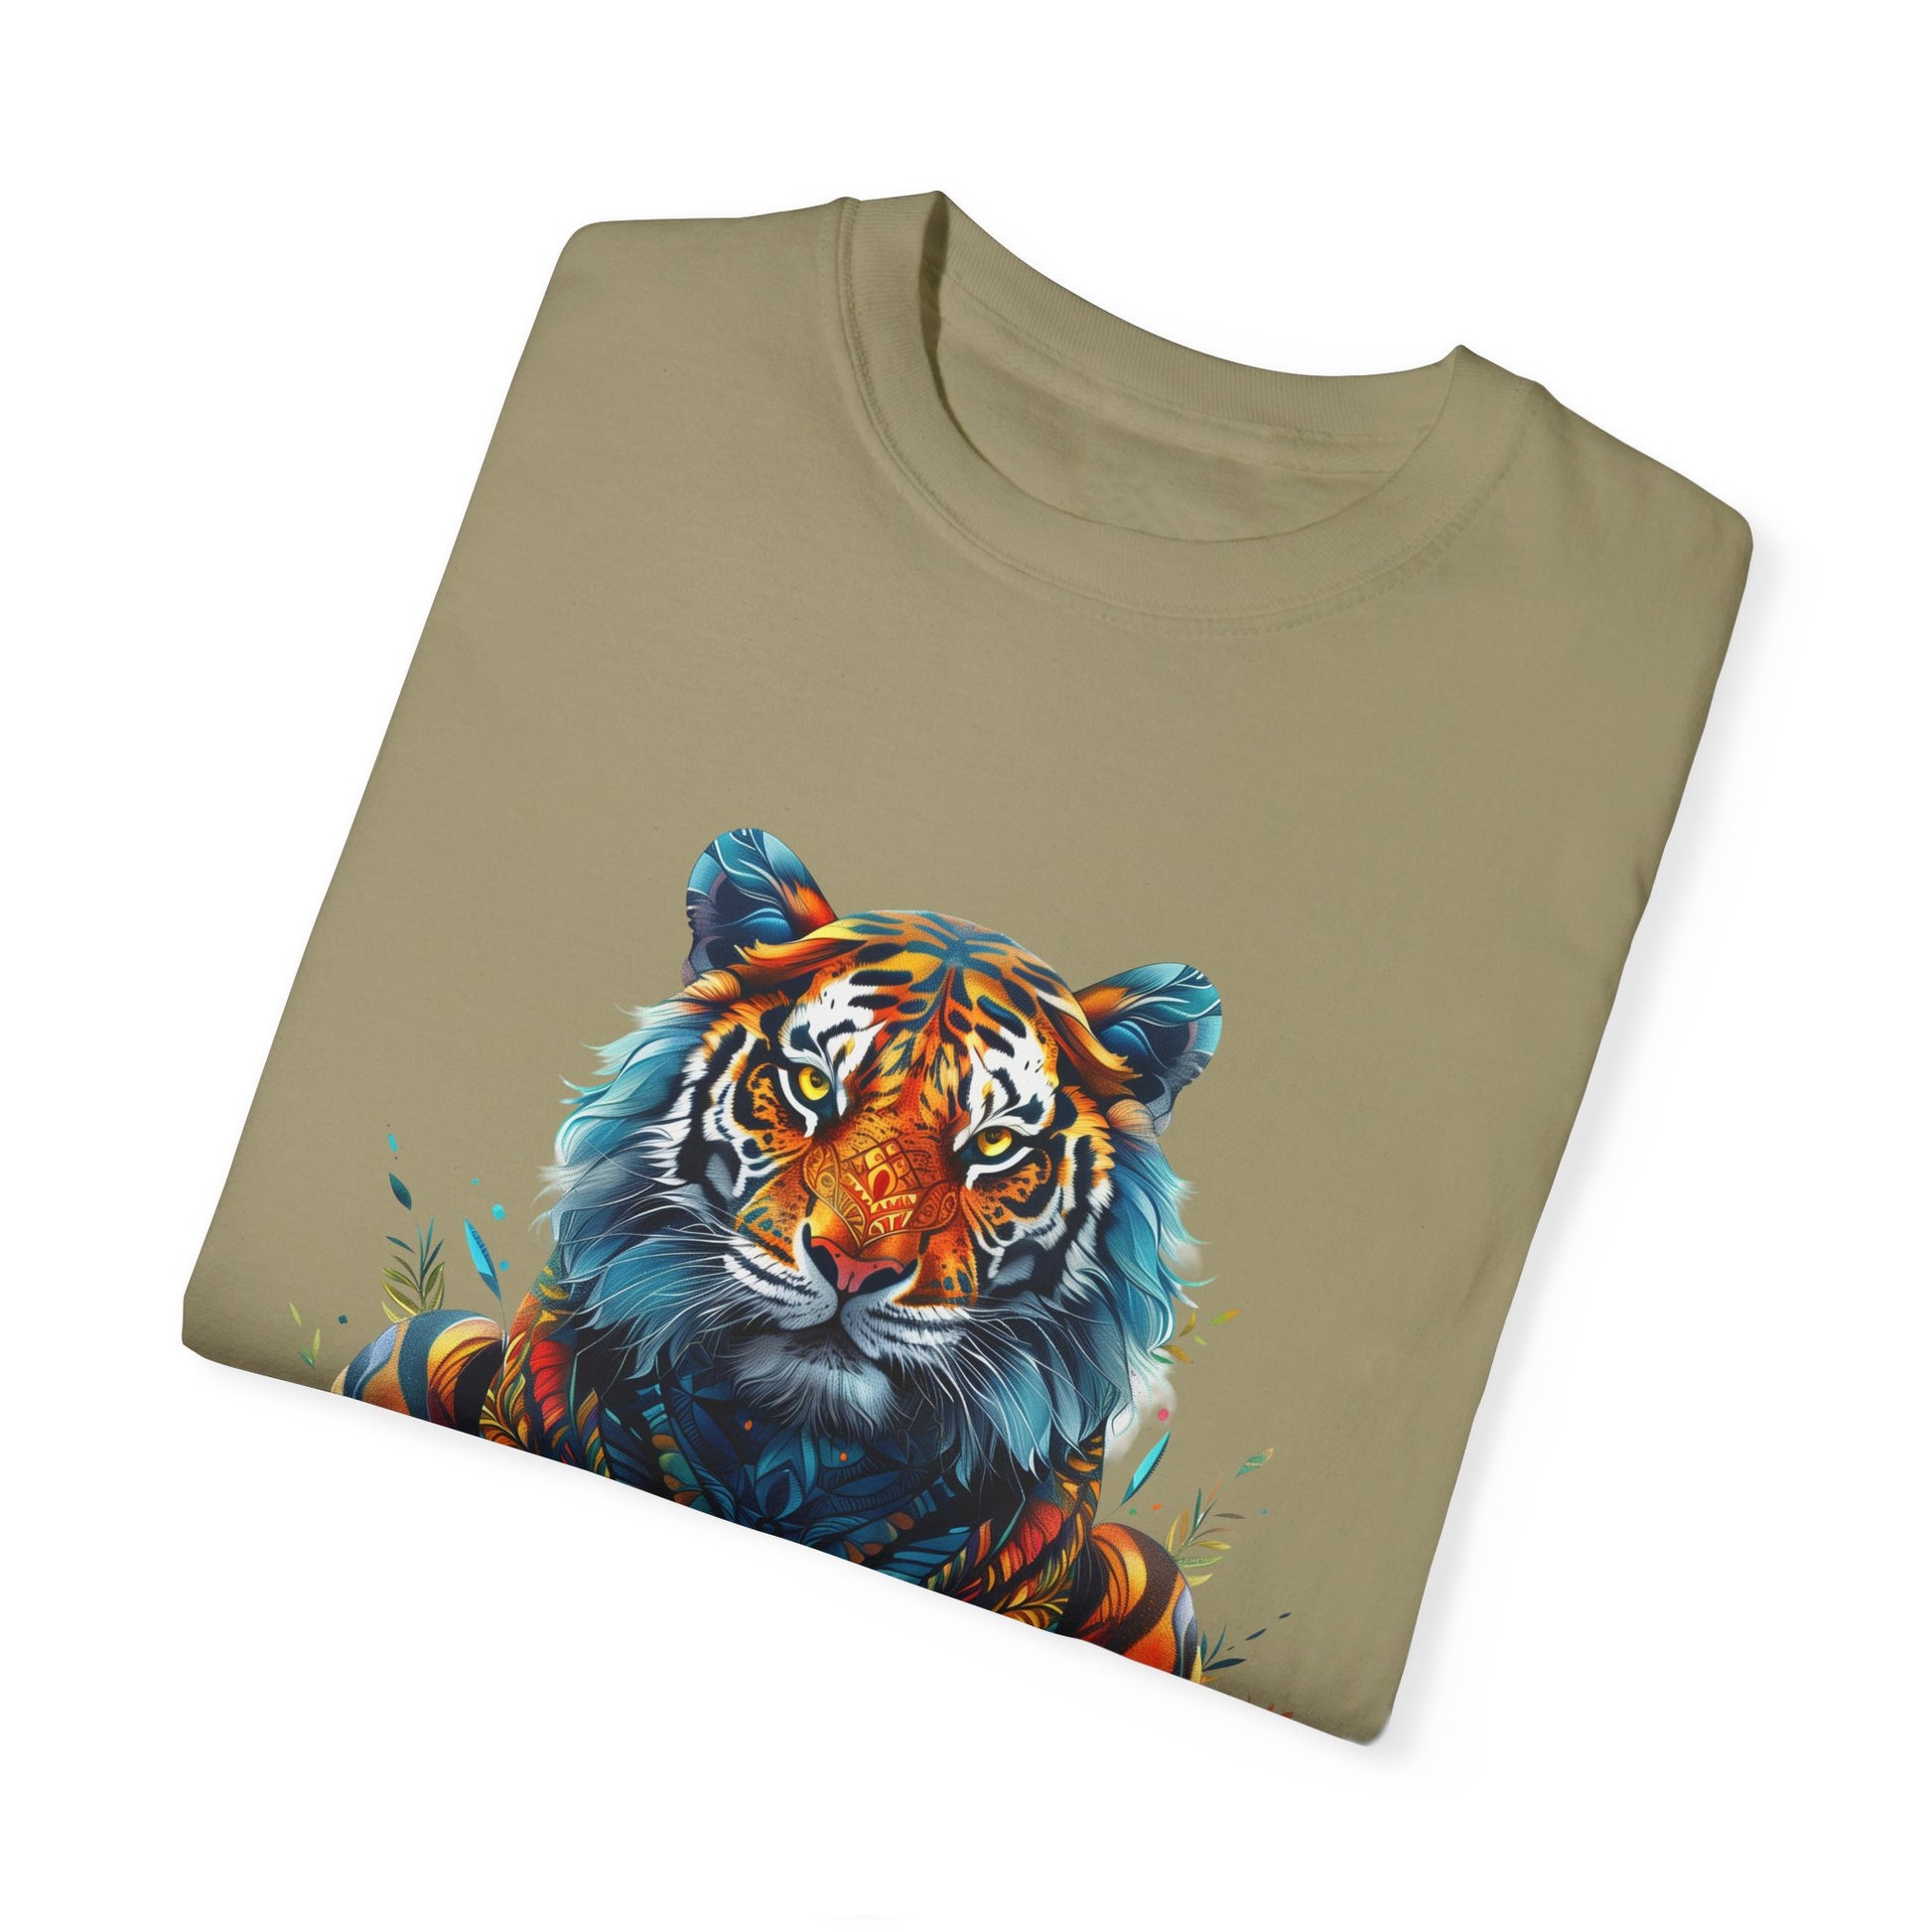 Lion Head Cool Graphic Design Novelty Unisex Garment-dyed T-shirt Cotton Funny Humorous Graphic Soft Premium Unisex Men Women Khaki T-shirt Birthday Gift-47